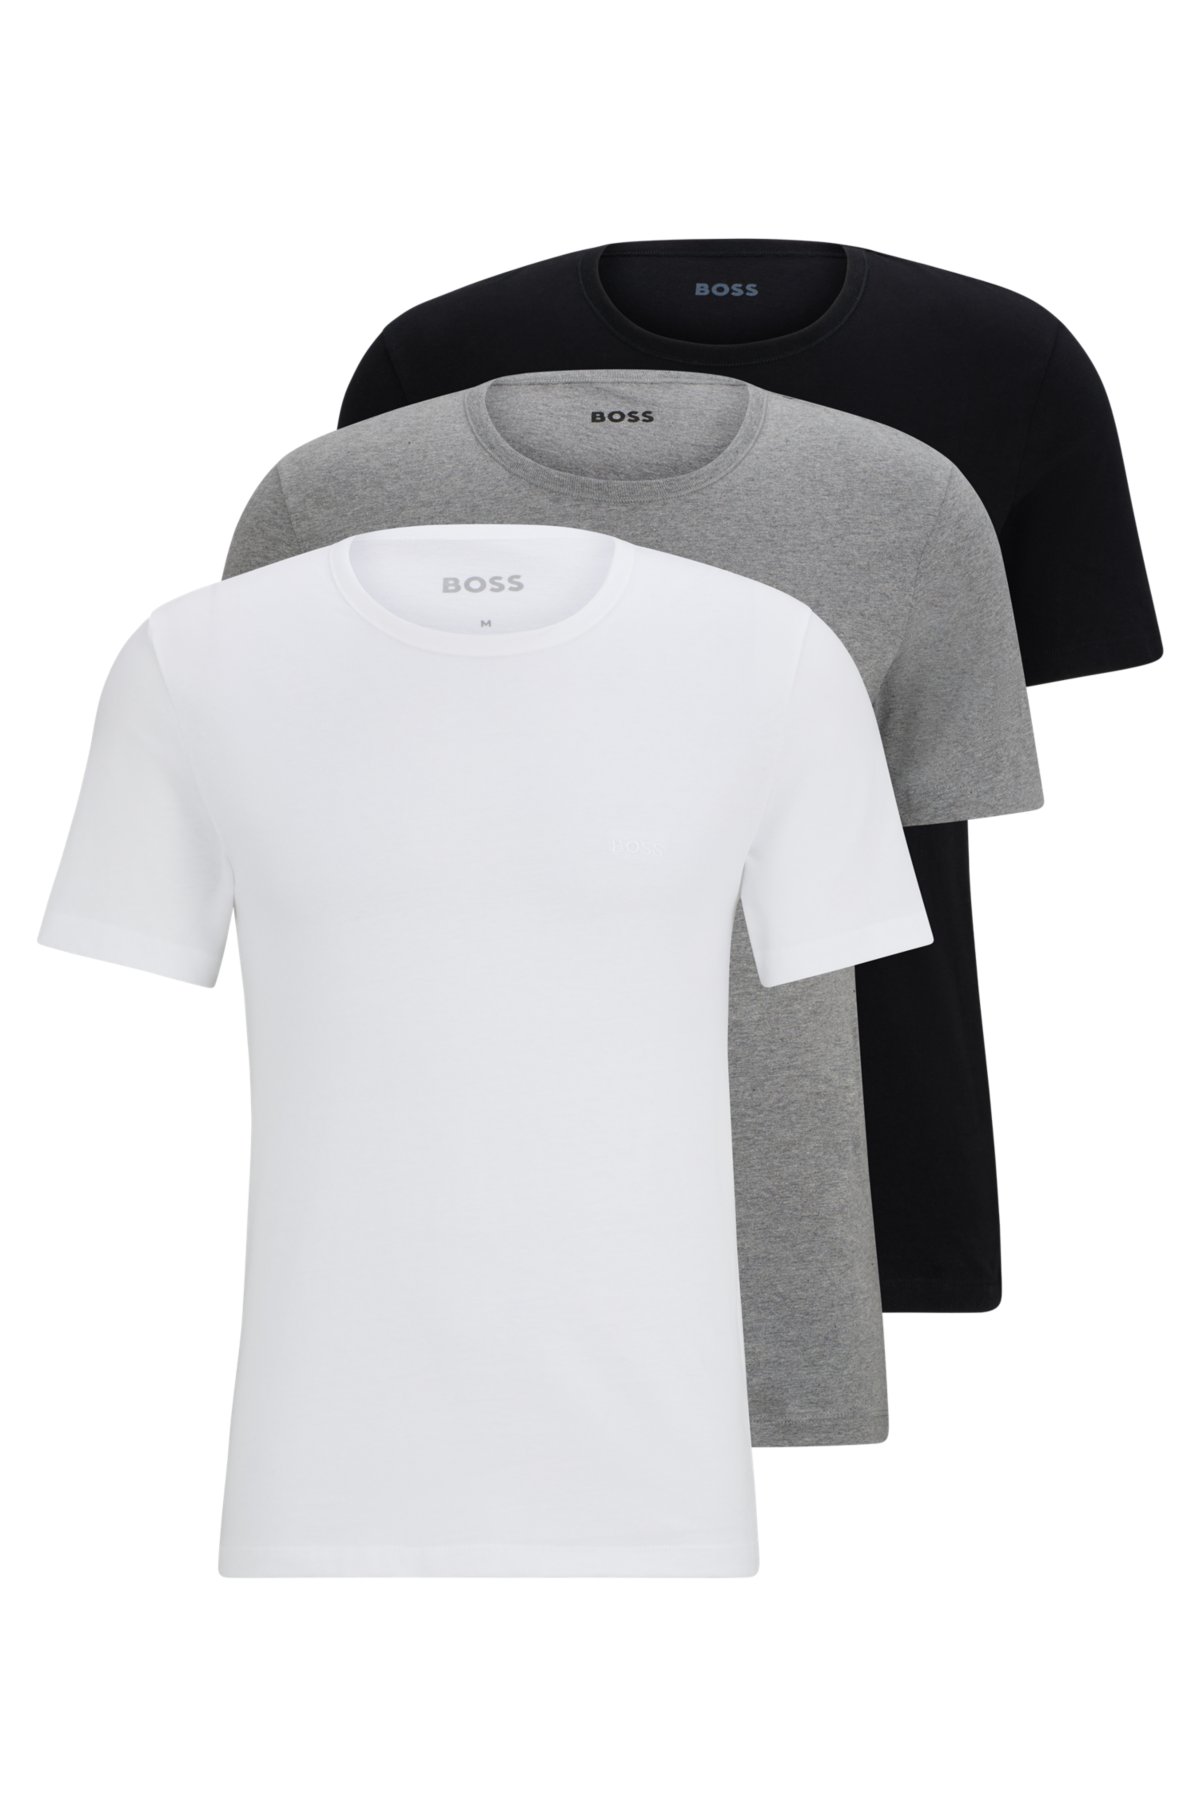 Calvin Klein Men's 3-Pack Classic Crew Neck T-Shirt, White, Medium :  : Clothing, Shoes & Accessories